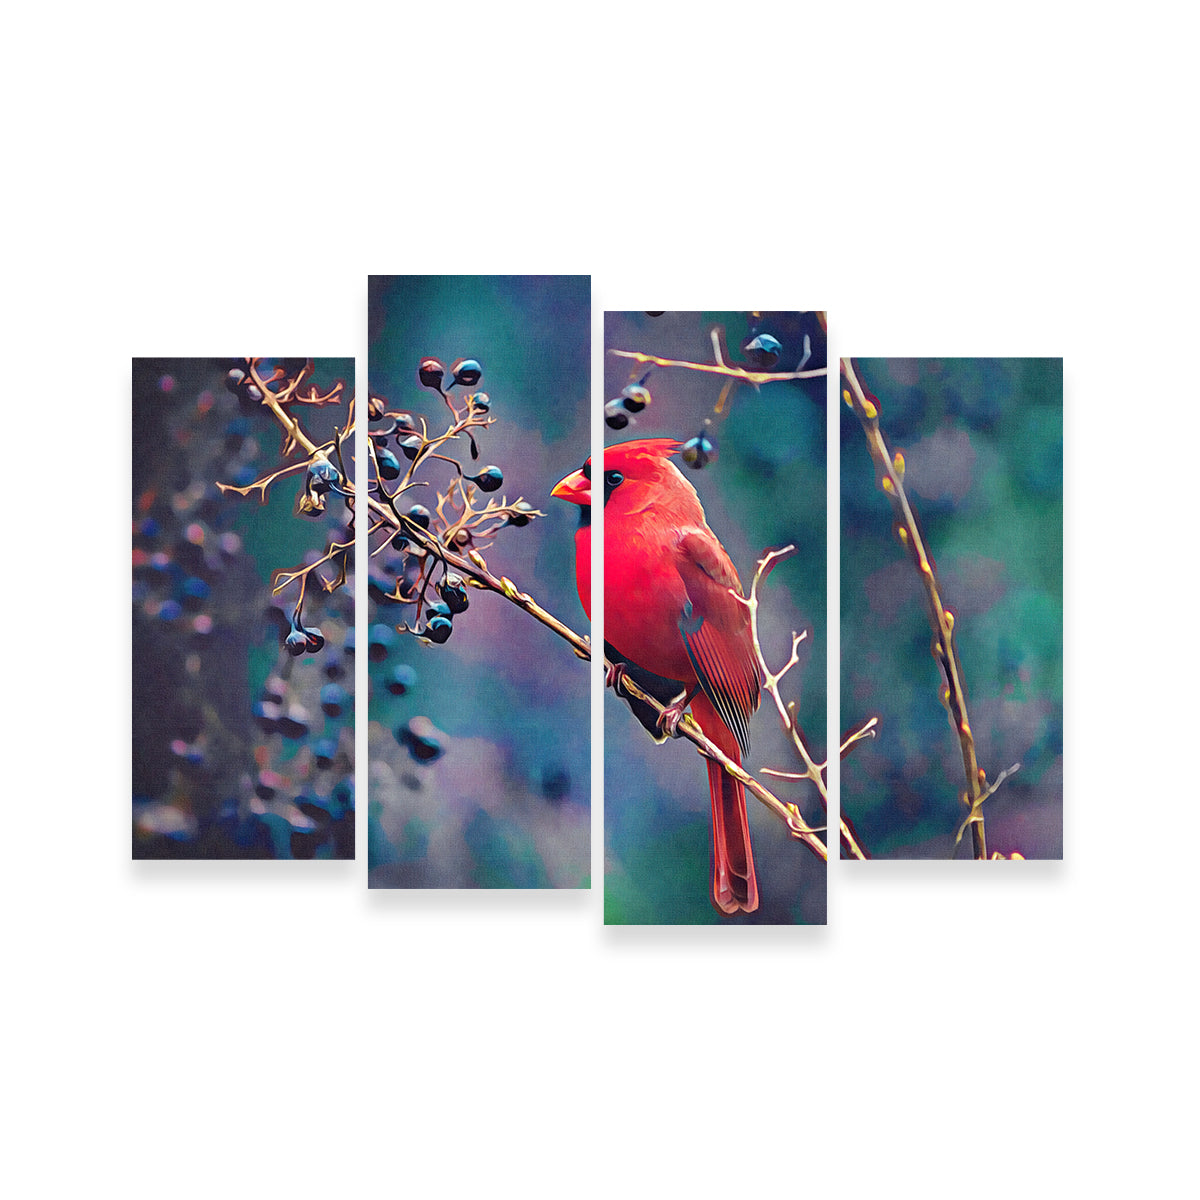 Cardinal and Berries